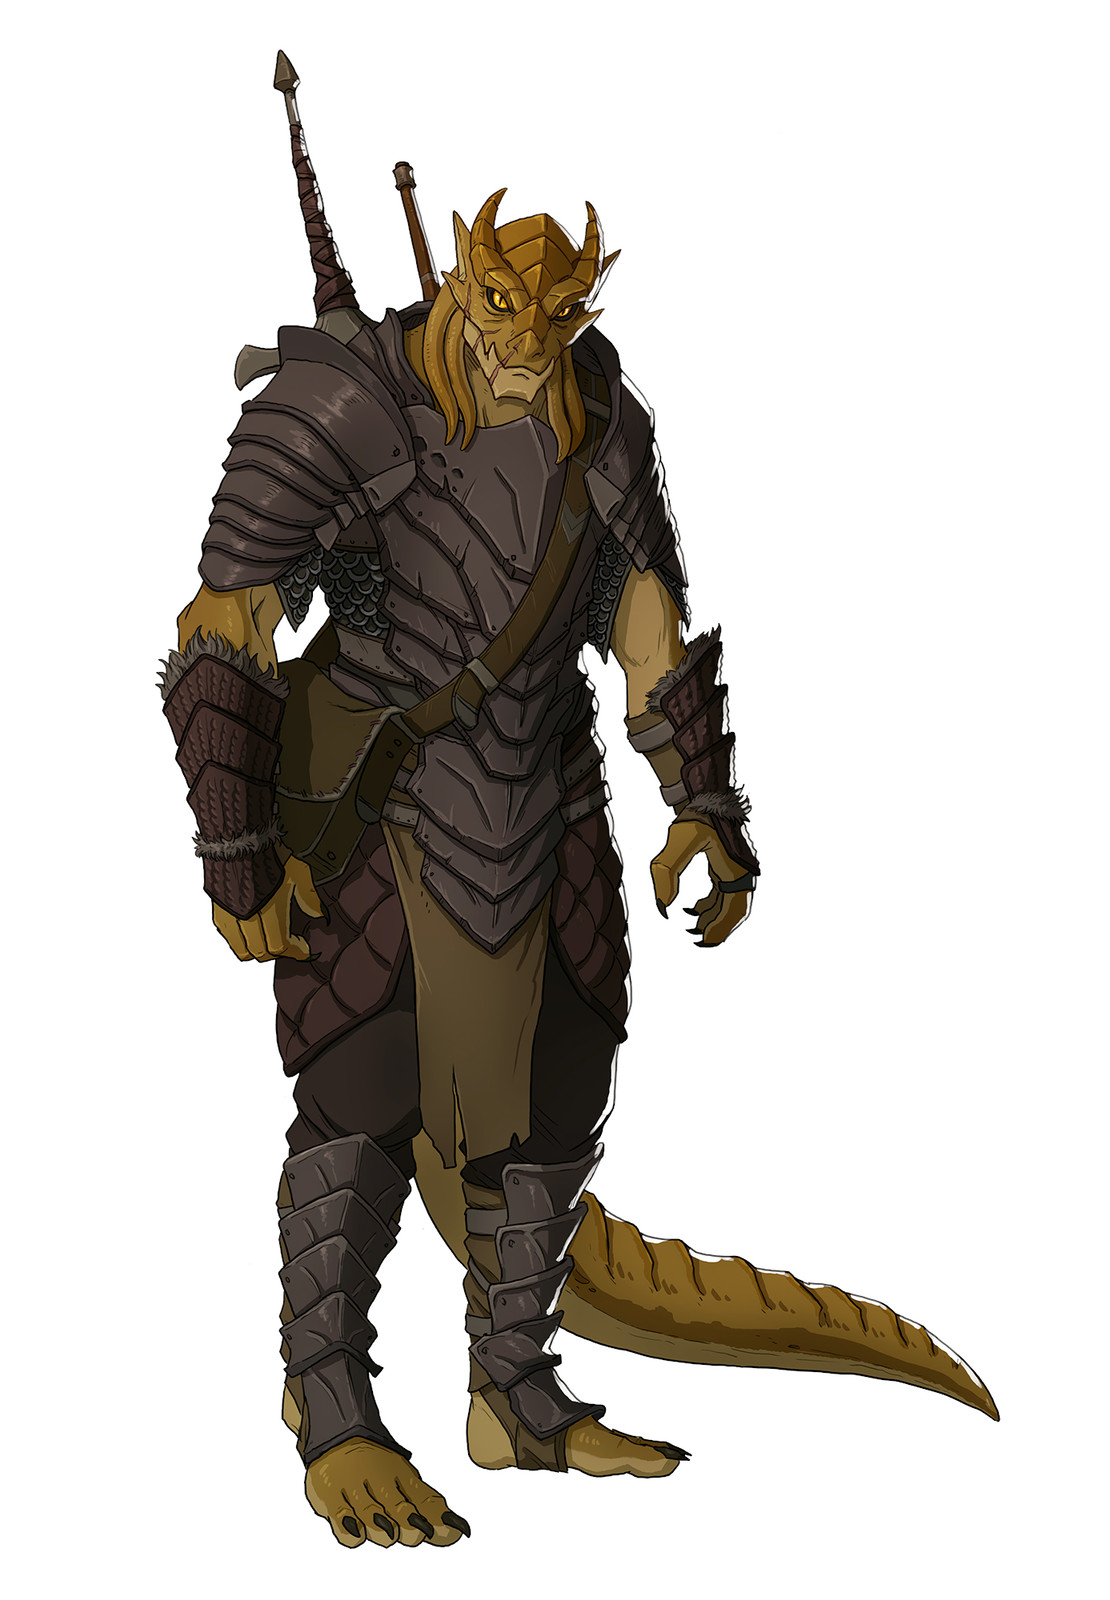 Mallico, copper dragonborn battlemaster